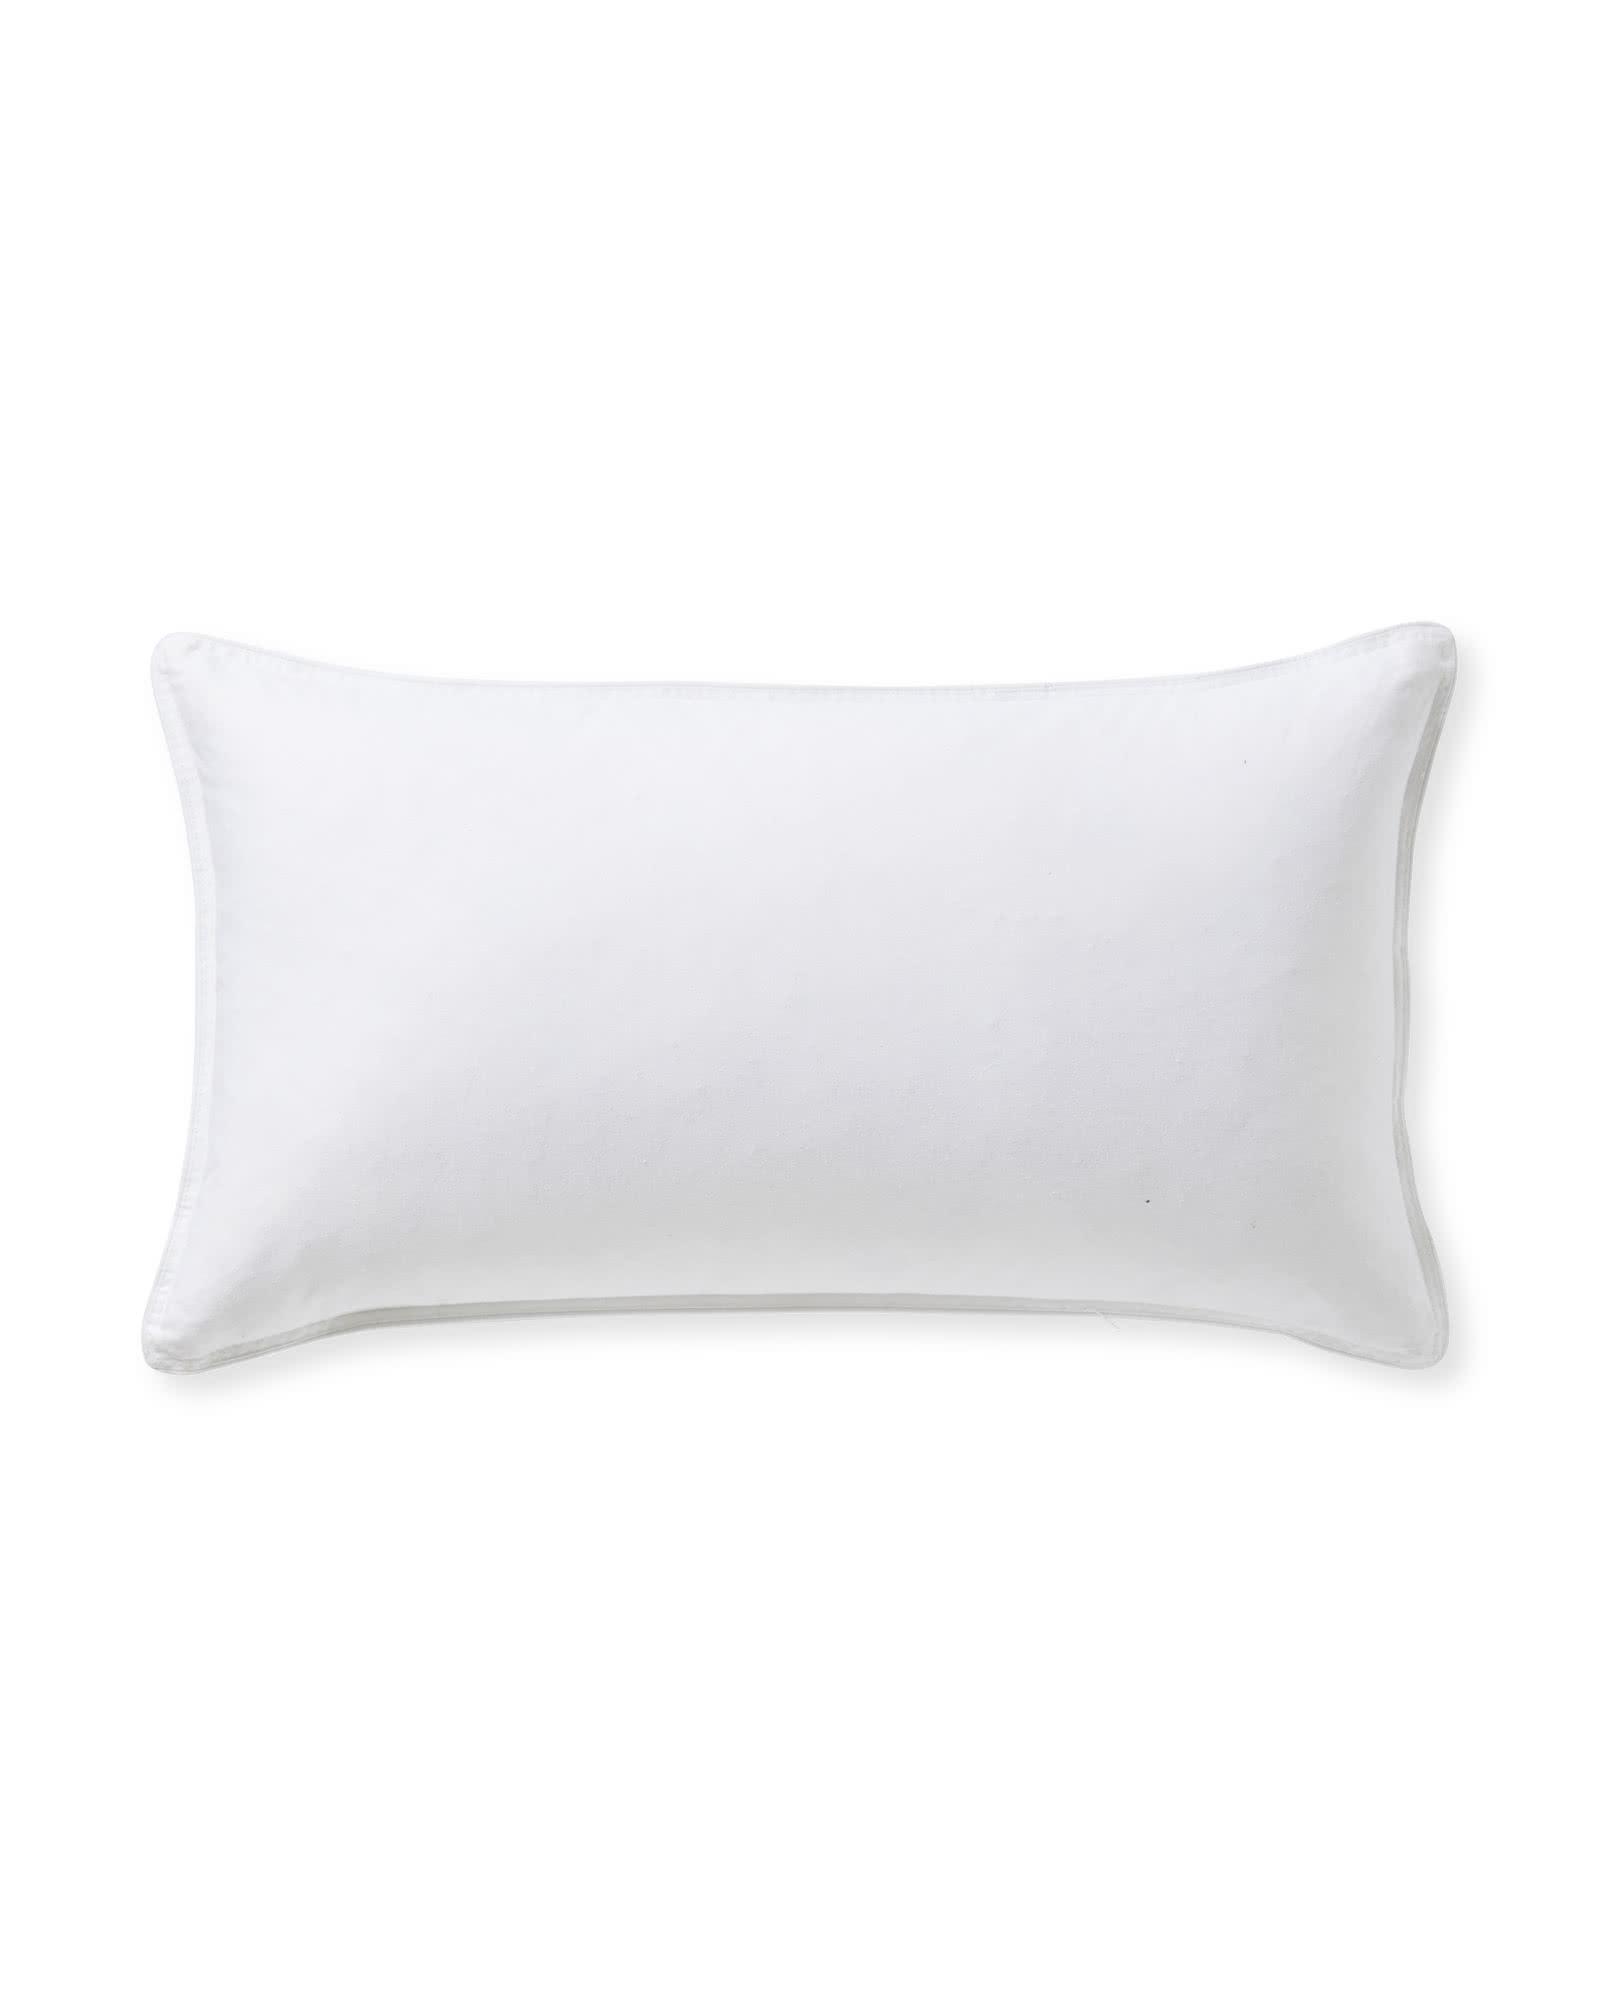 Pillow Form